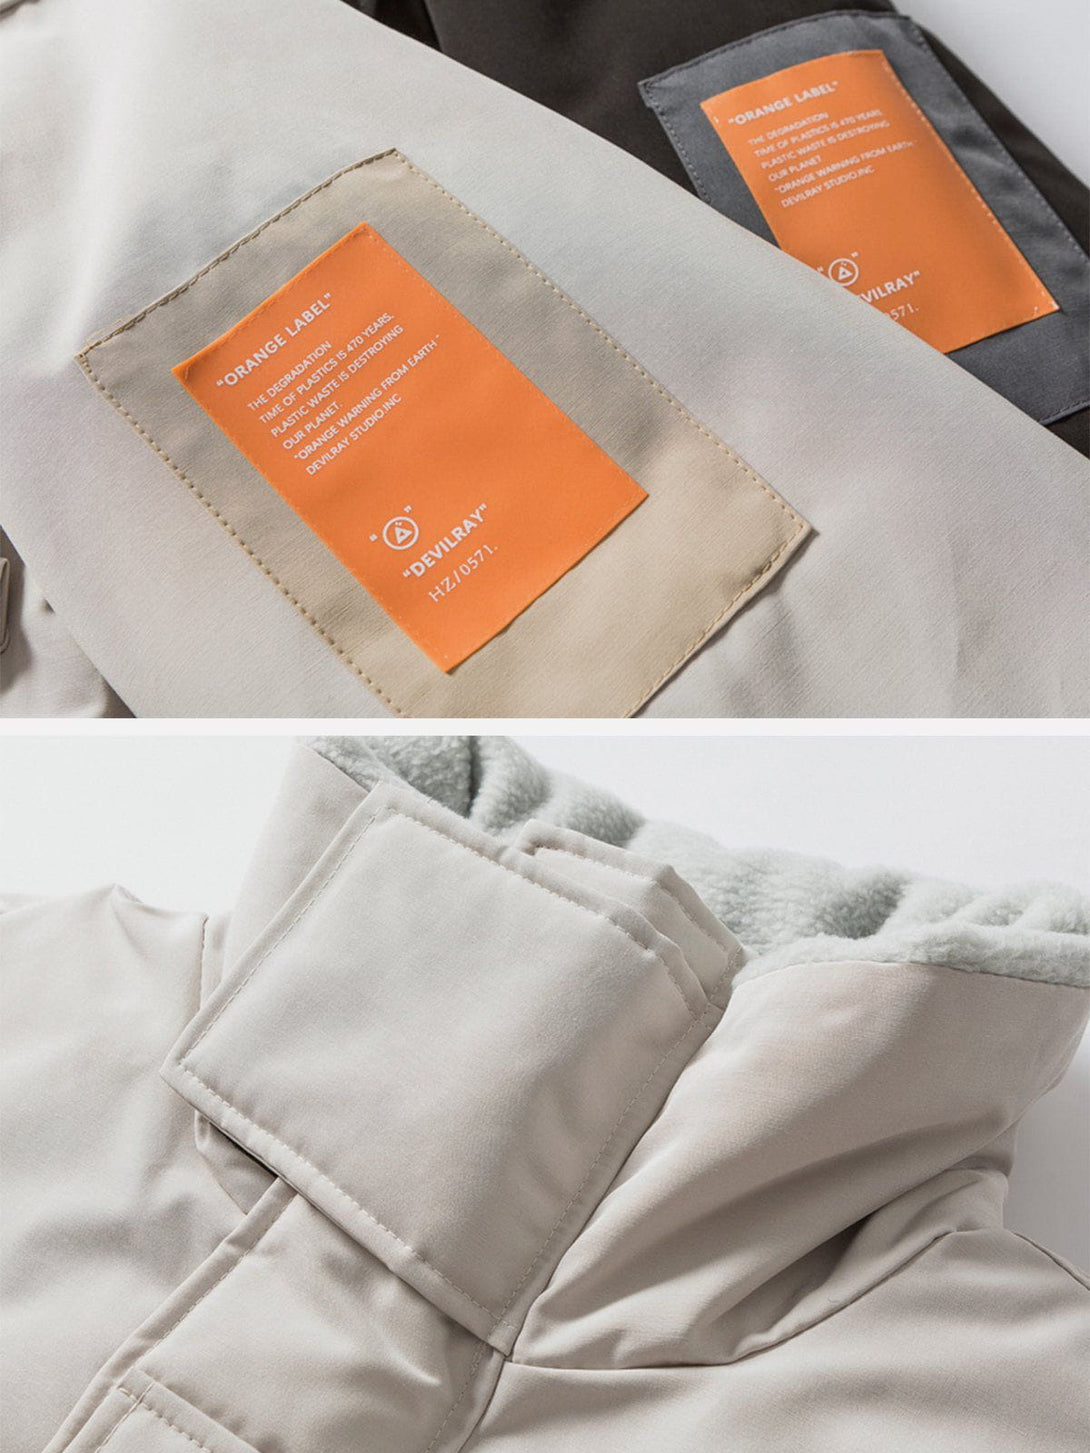 Majesda® - Large Pocket Cargo Winter Coat outfit ideas streetwear fashion